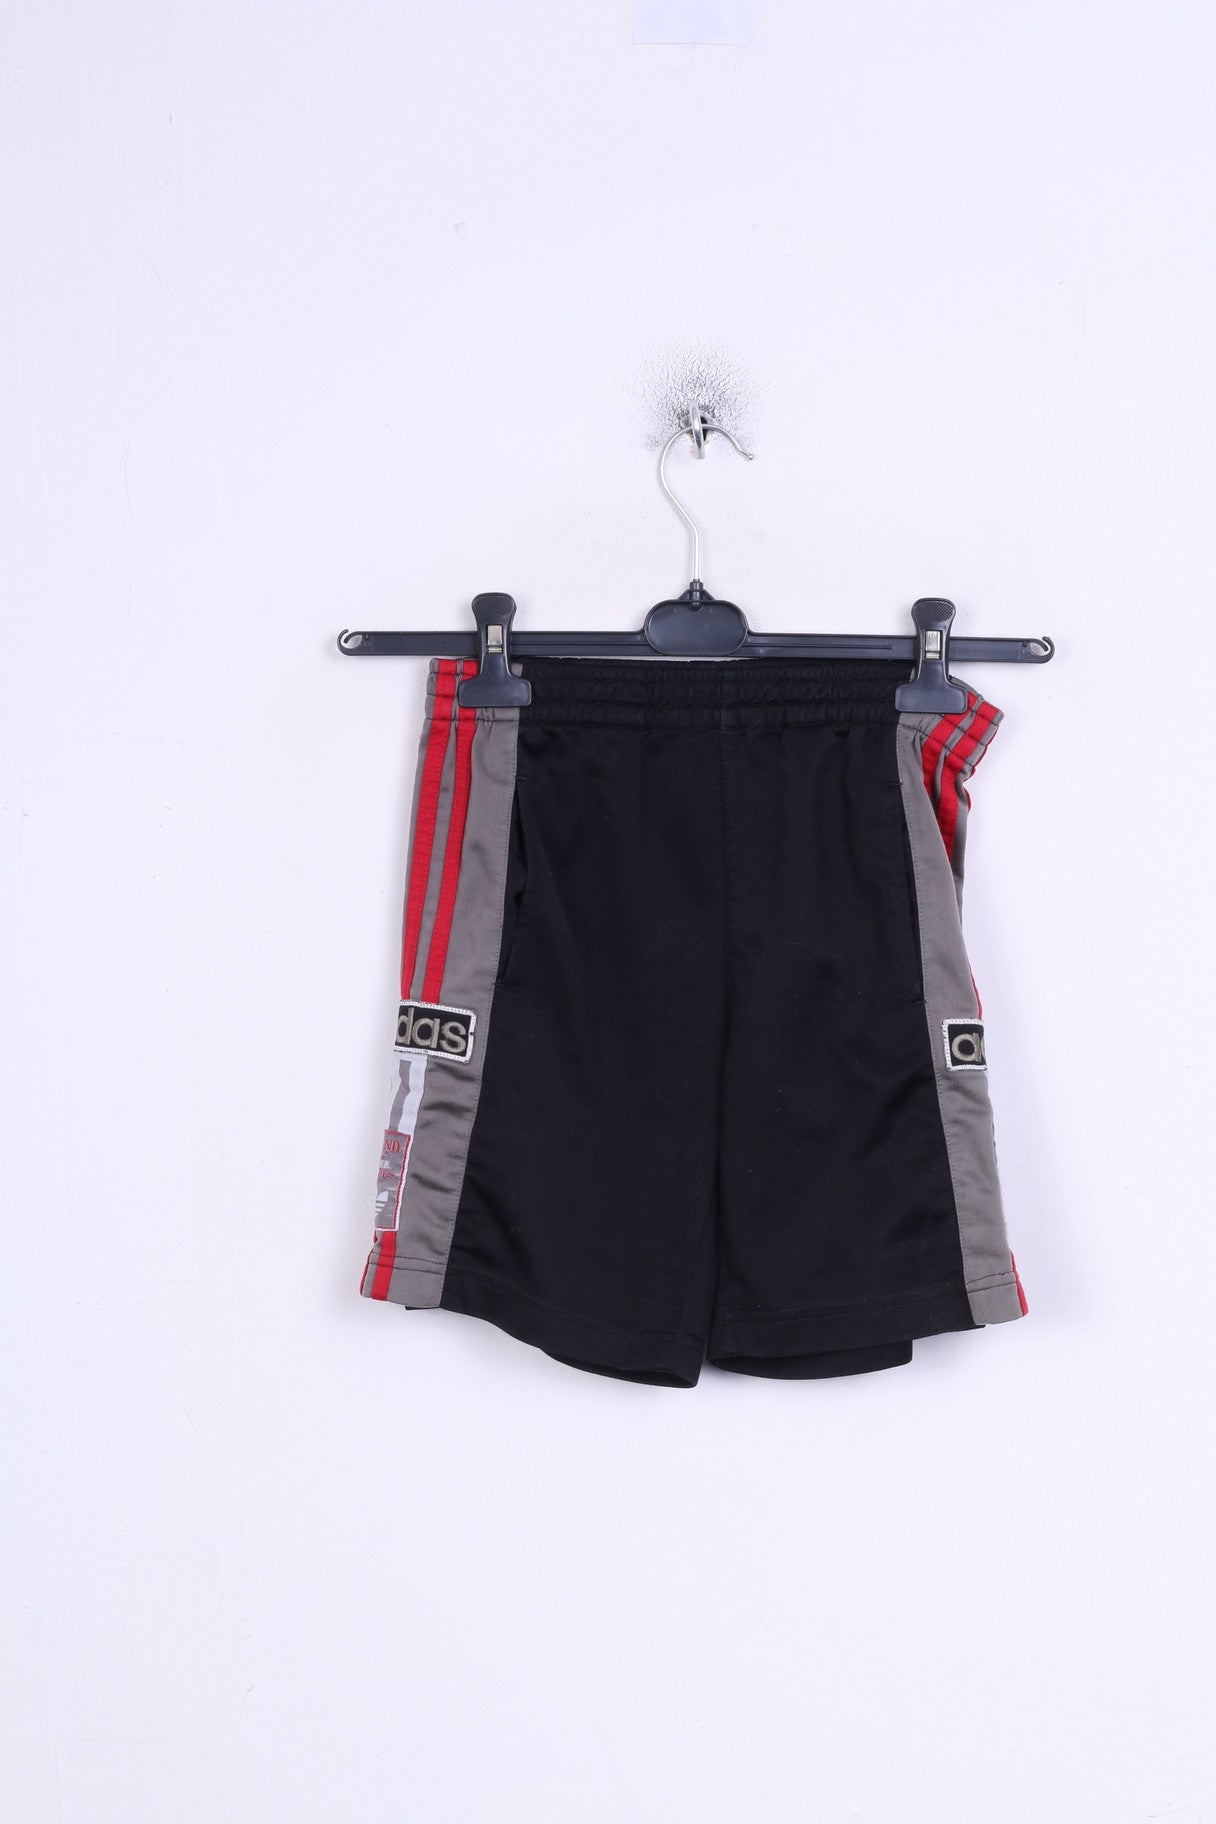 Adidas Boys 116 Shorts Sport Black Sweatpants